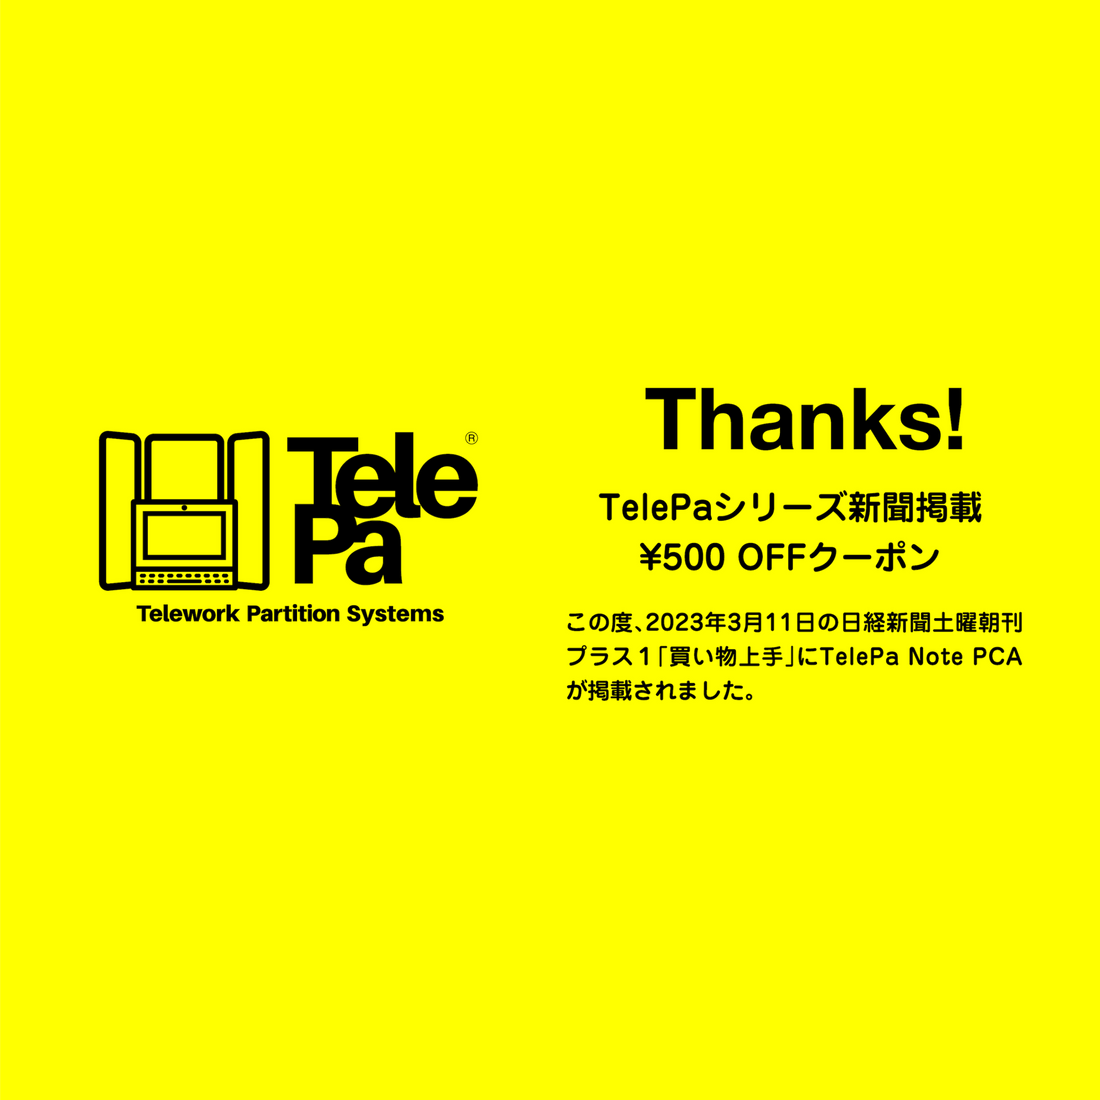 TelePaシリーズ新聞掲載 ¥500 OFFクーポン! - adpro-market